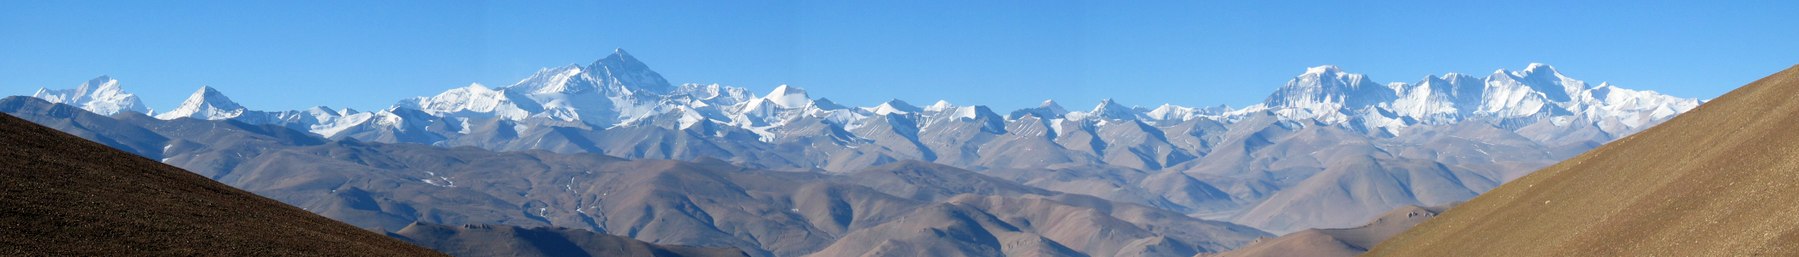 Mount Everest seen from Tibet